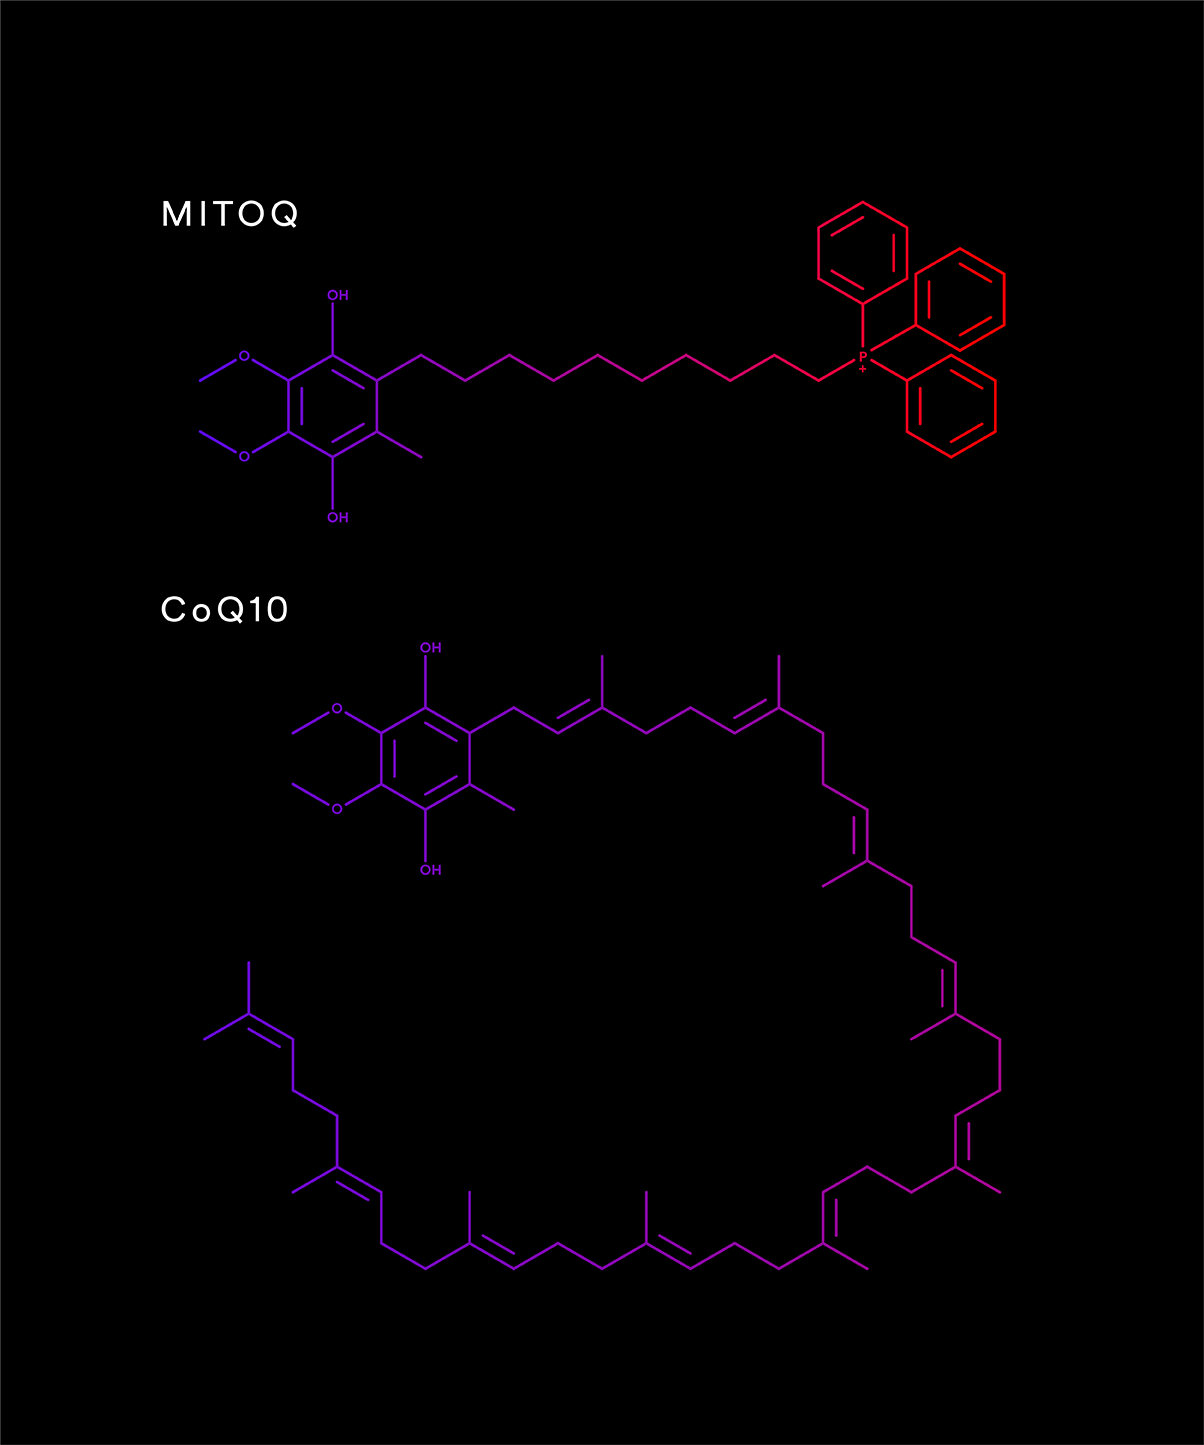 Difference in structure - MitoQ vs CoQ10